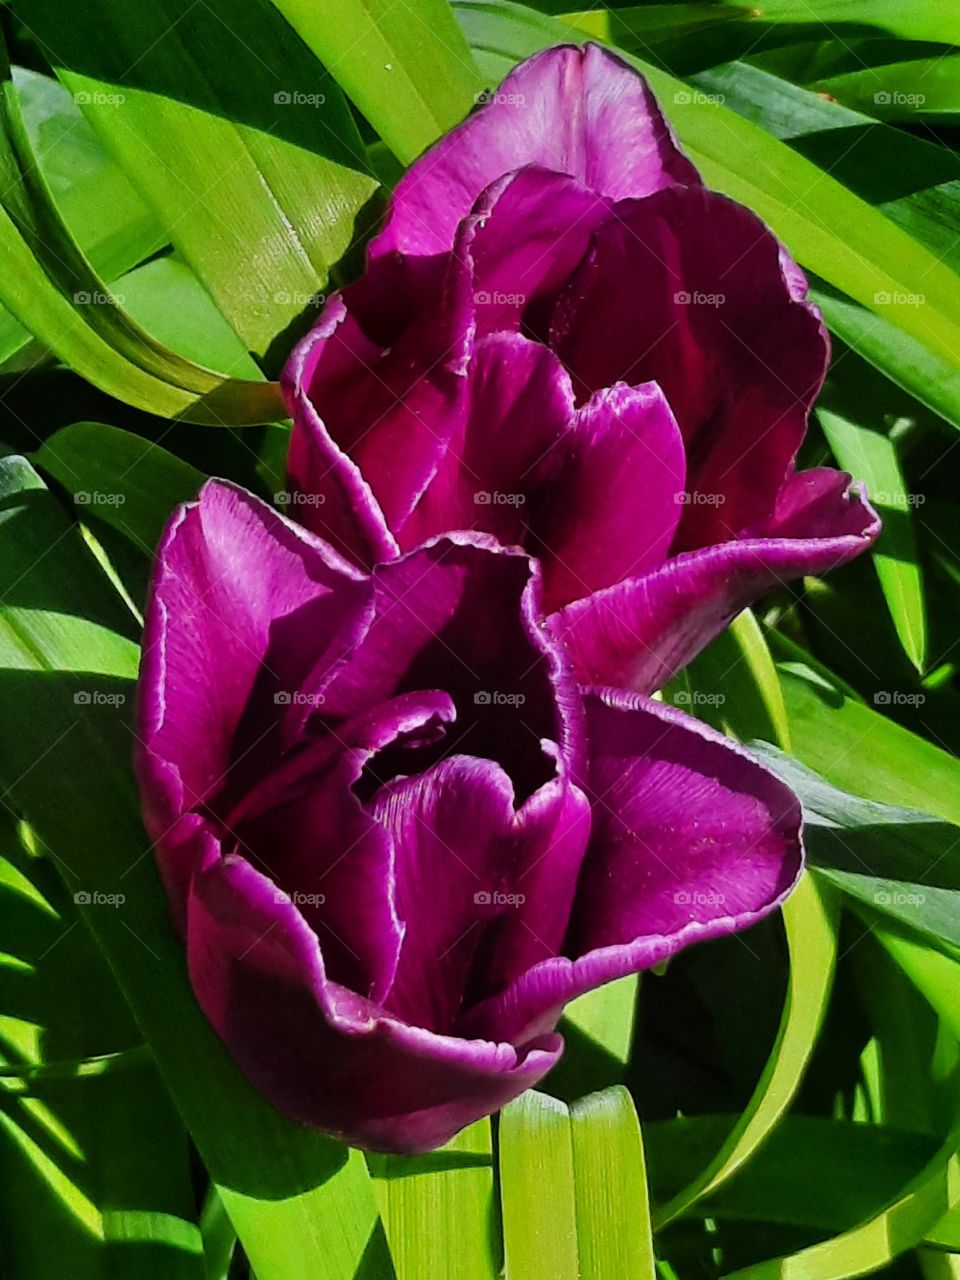 sunlit purple tulips in the garden